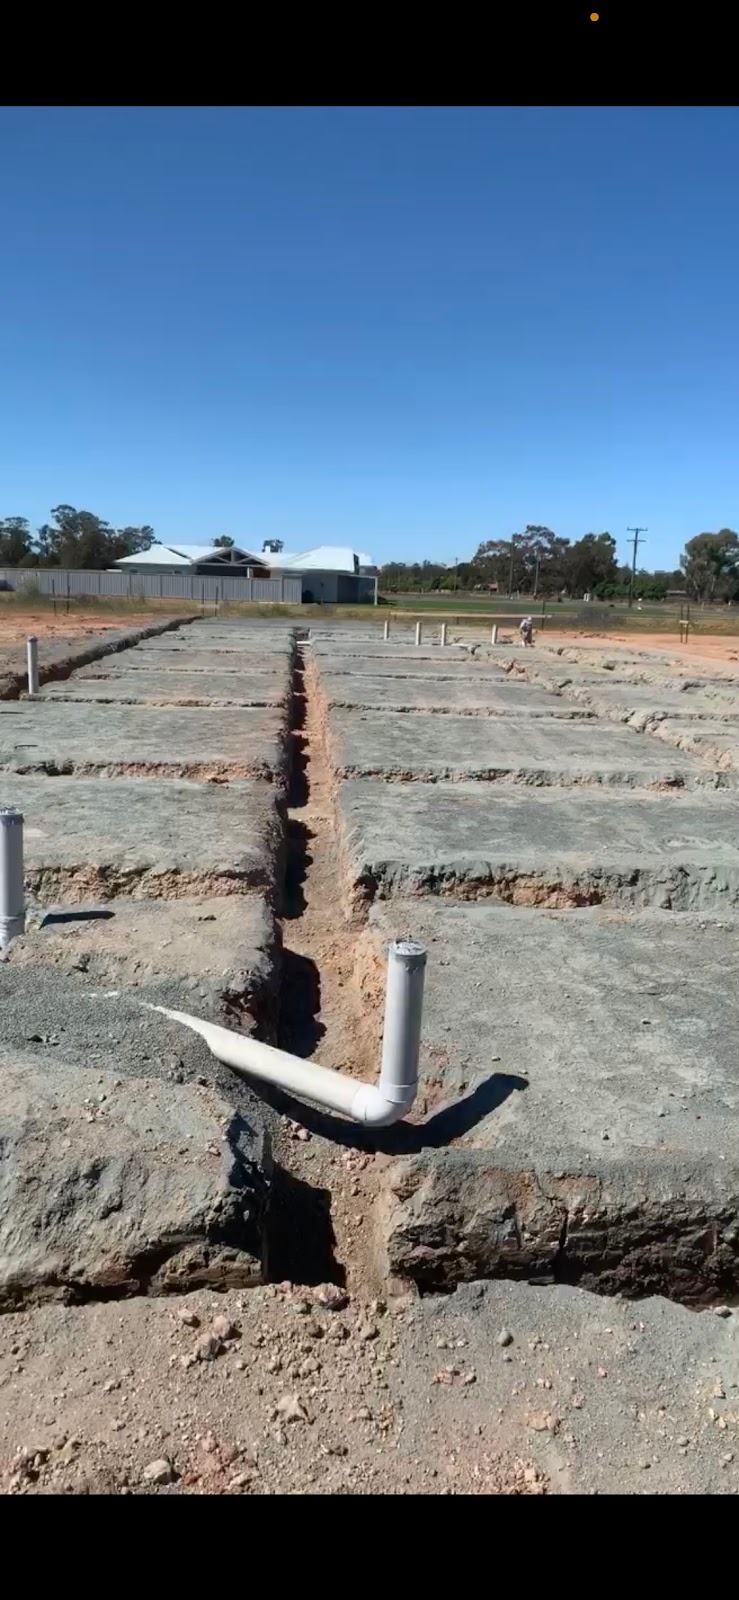 Mark Wood Excavations | general contractor | 37 Bellarwi Rd, West Wyalong NSW 2671, Australia | 0405990418 OR +61 405 990 418